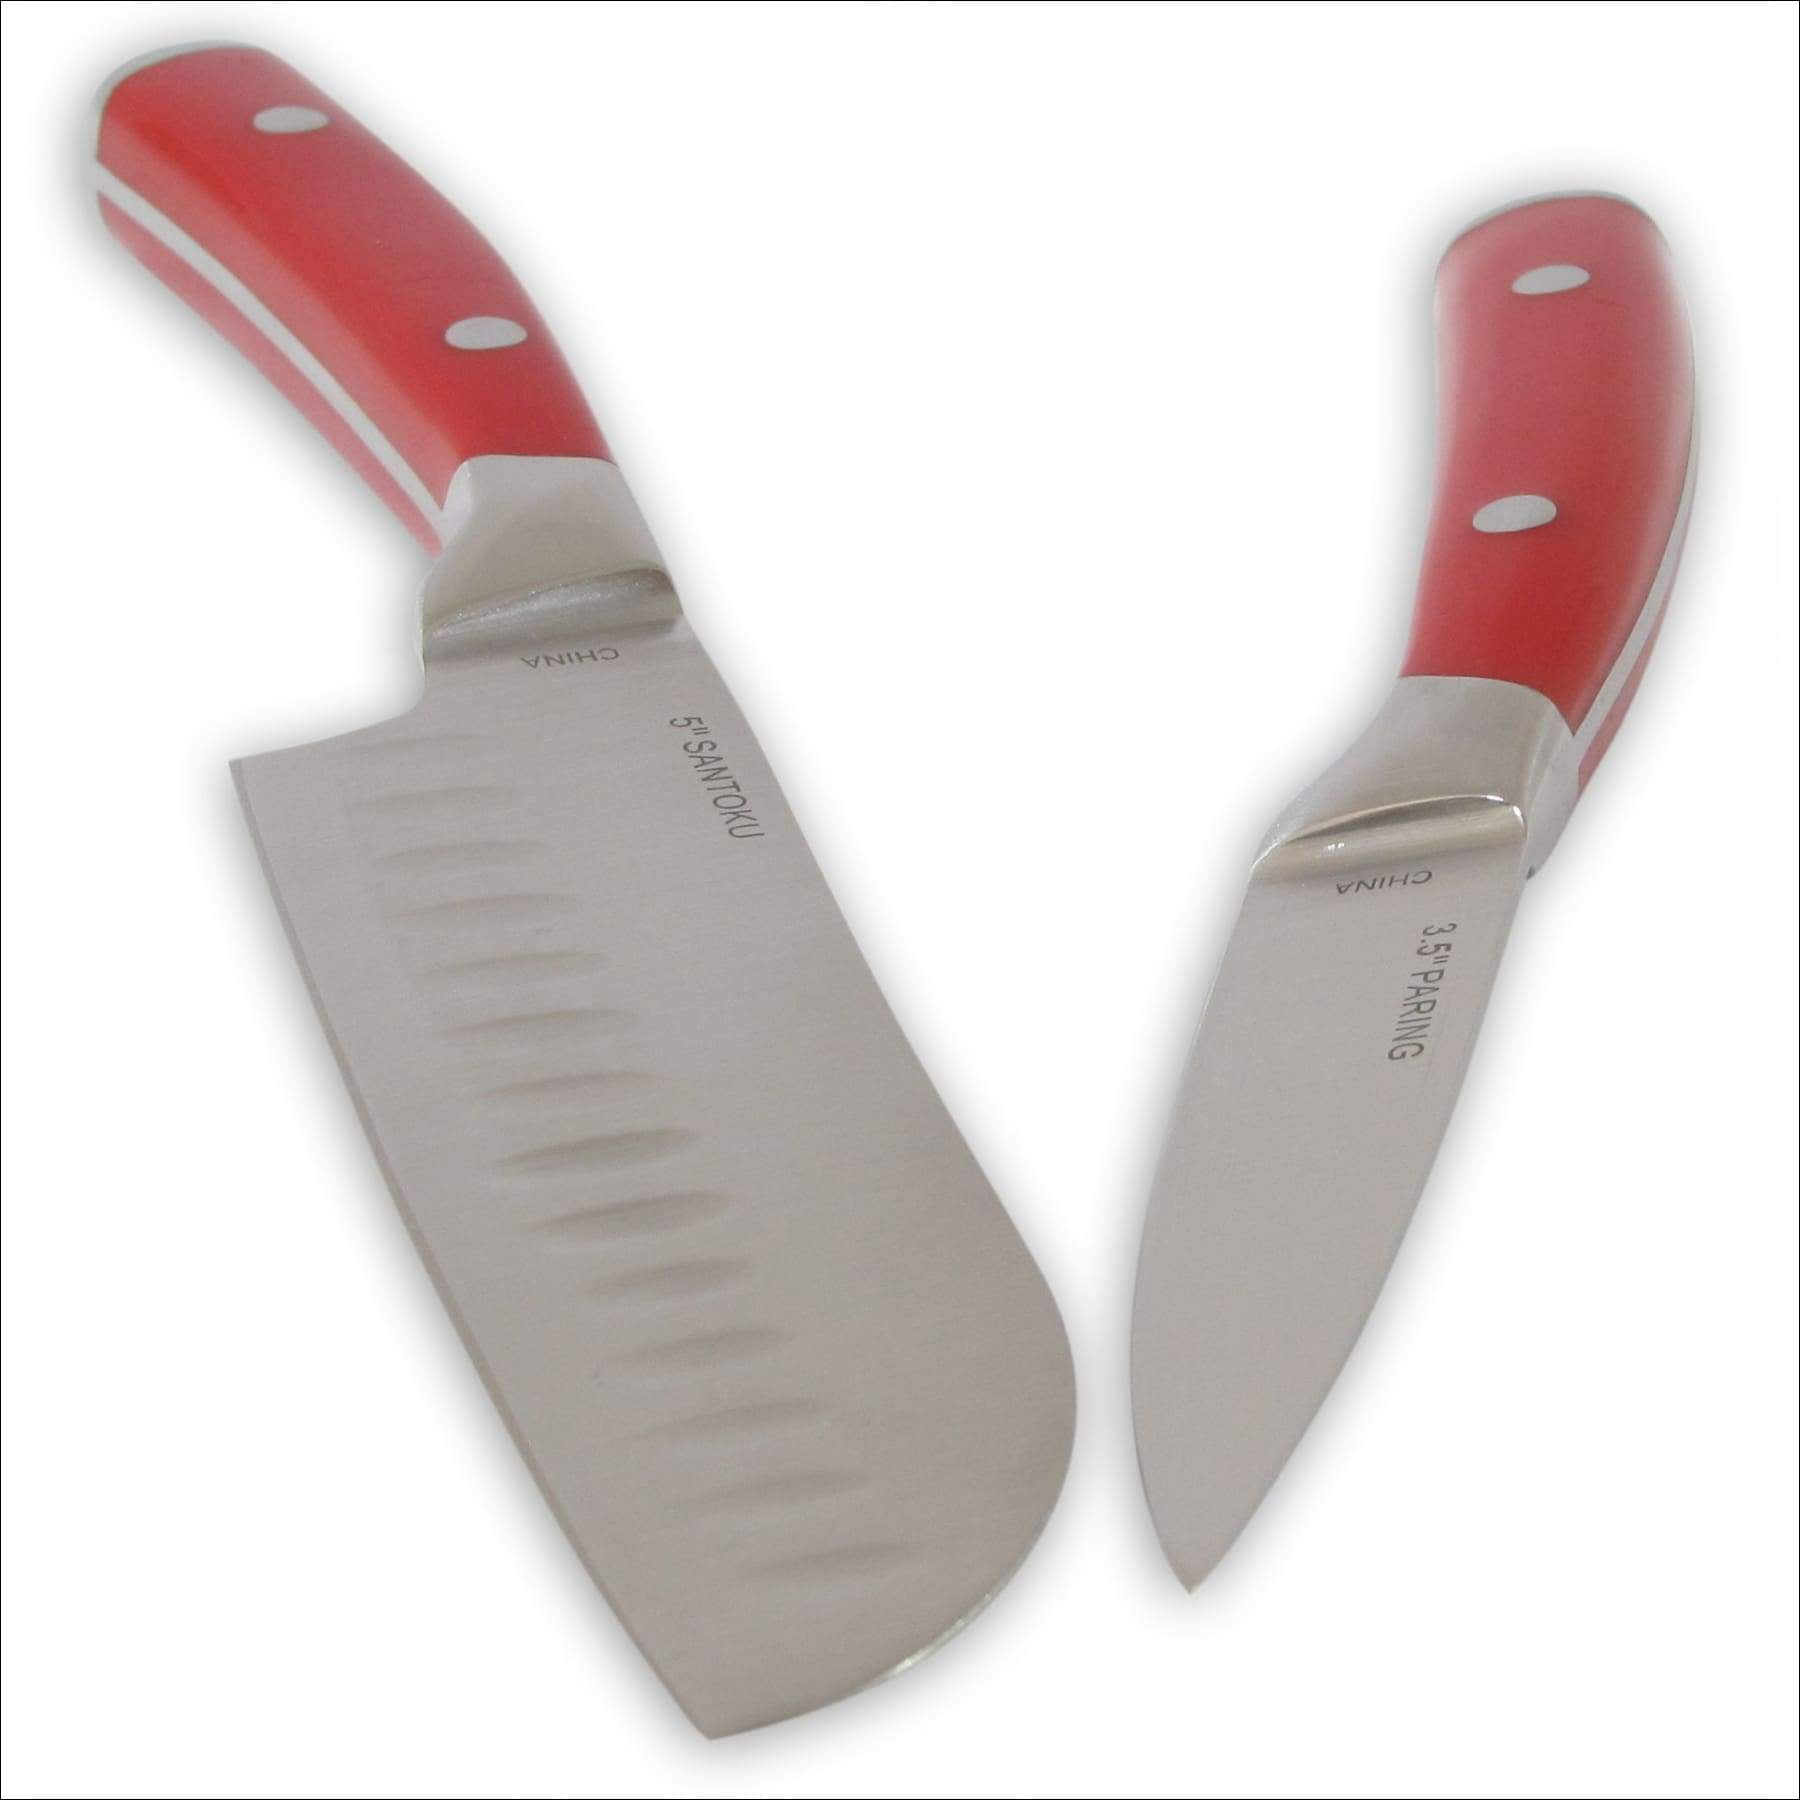 2 Knives Bundle - 3.5-Inch Paring w/7-Inch Santoku